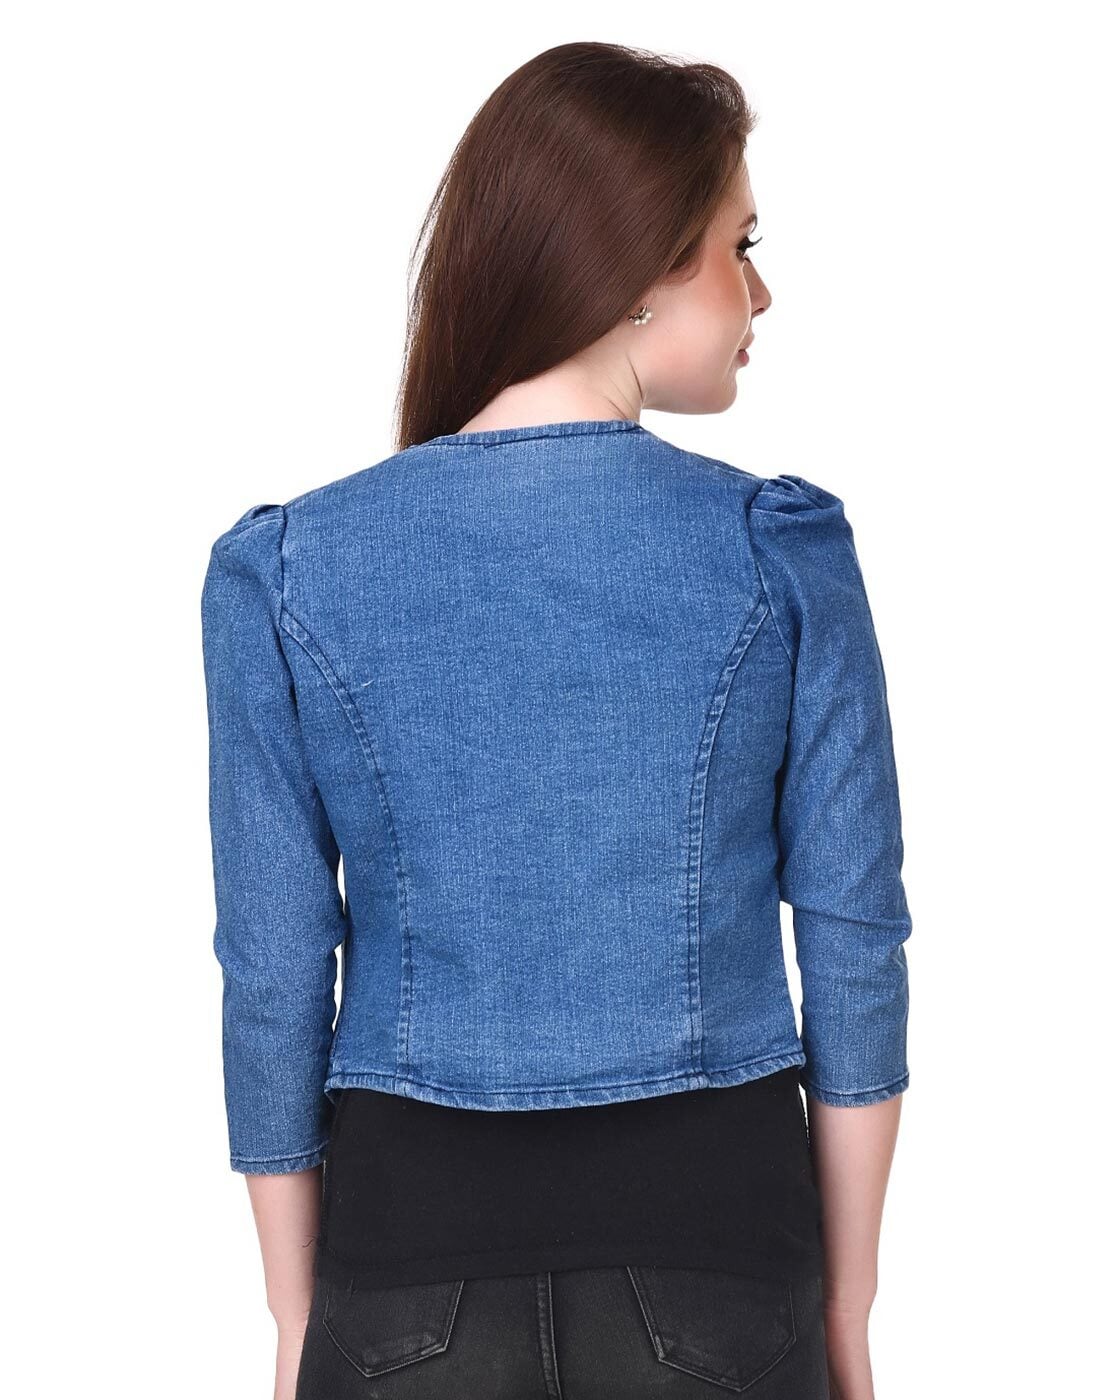 Buy Wrangler Women's Denim Jacket (ZFWJ1A8, Weathered , X-Large) at  Amazon.in